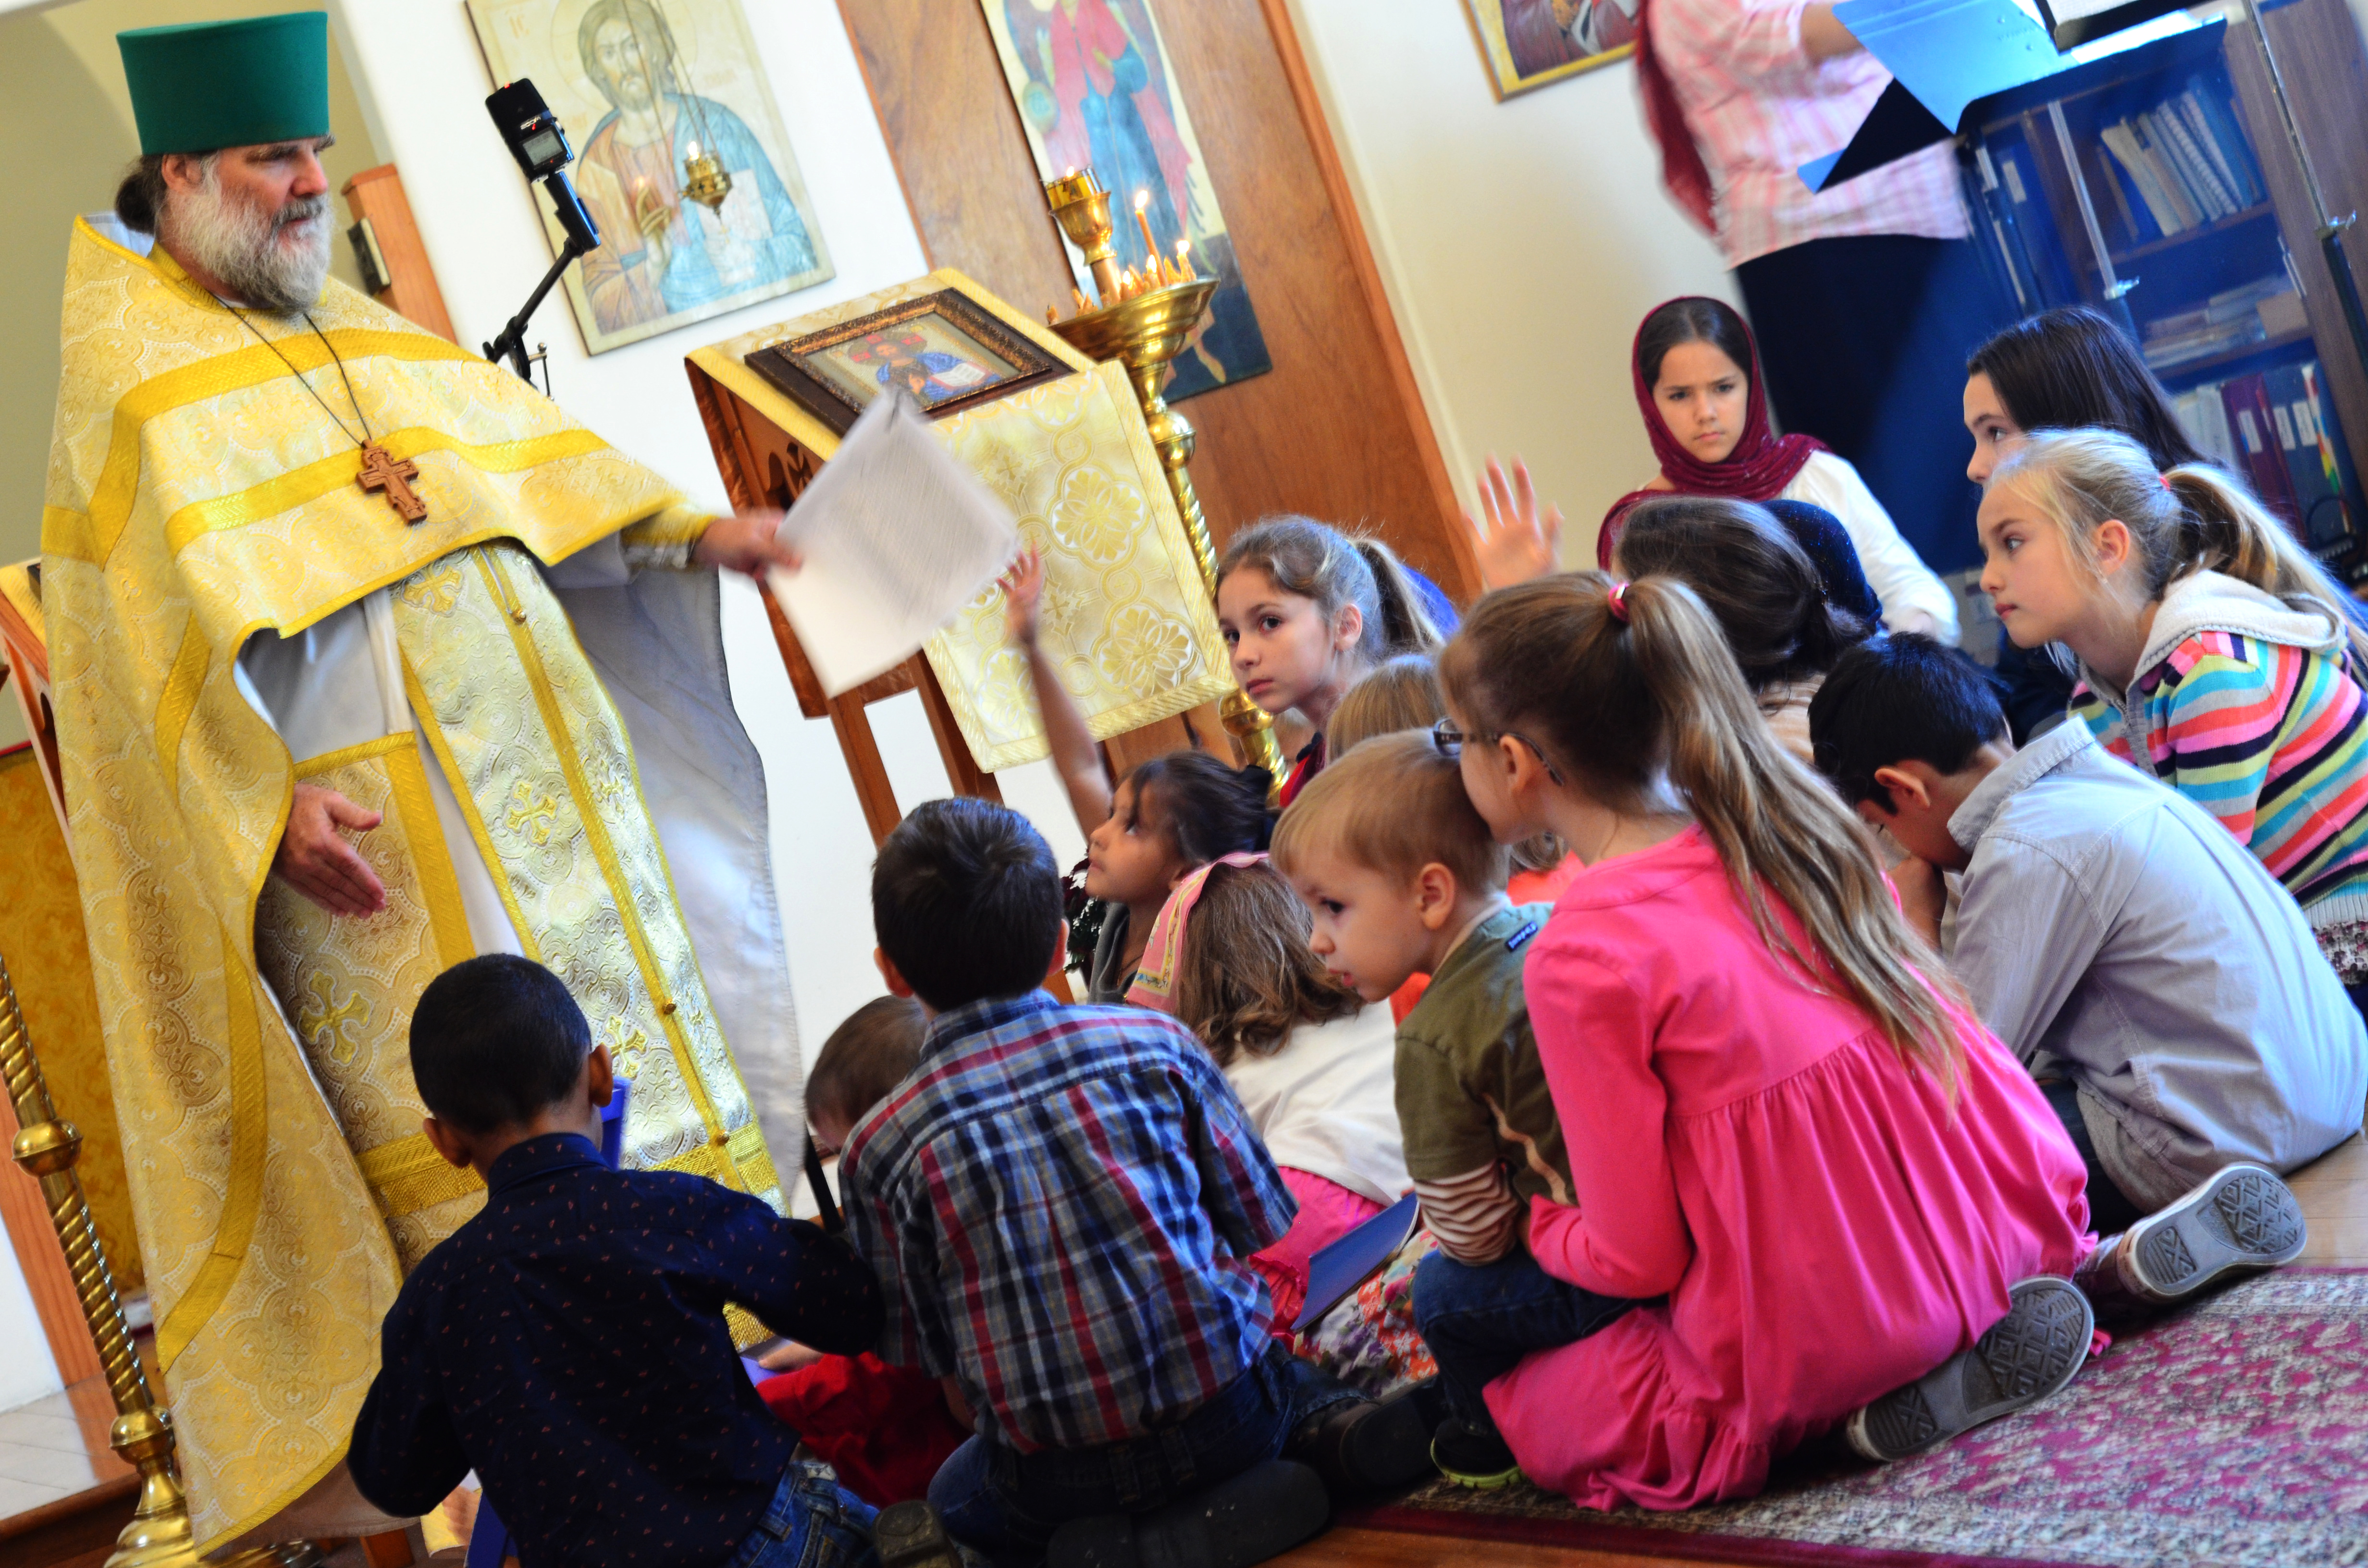 https://www.orthodox.net//photos/parish/sermon-to-children-01.jpg